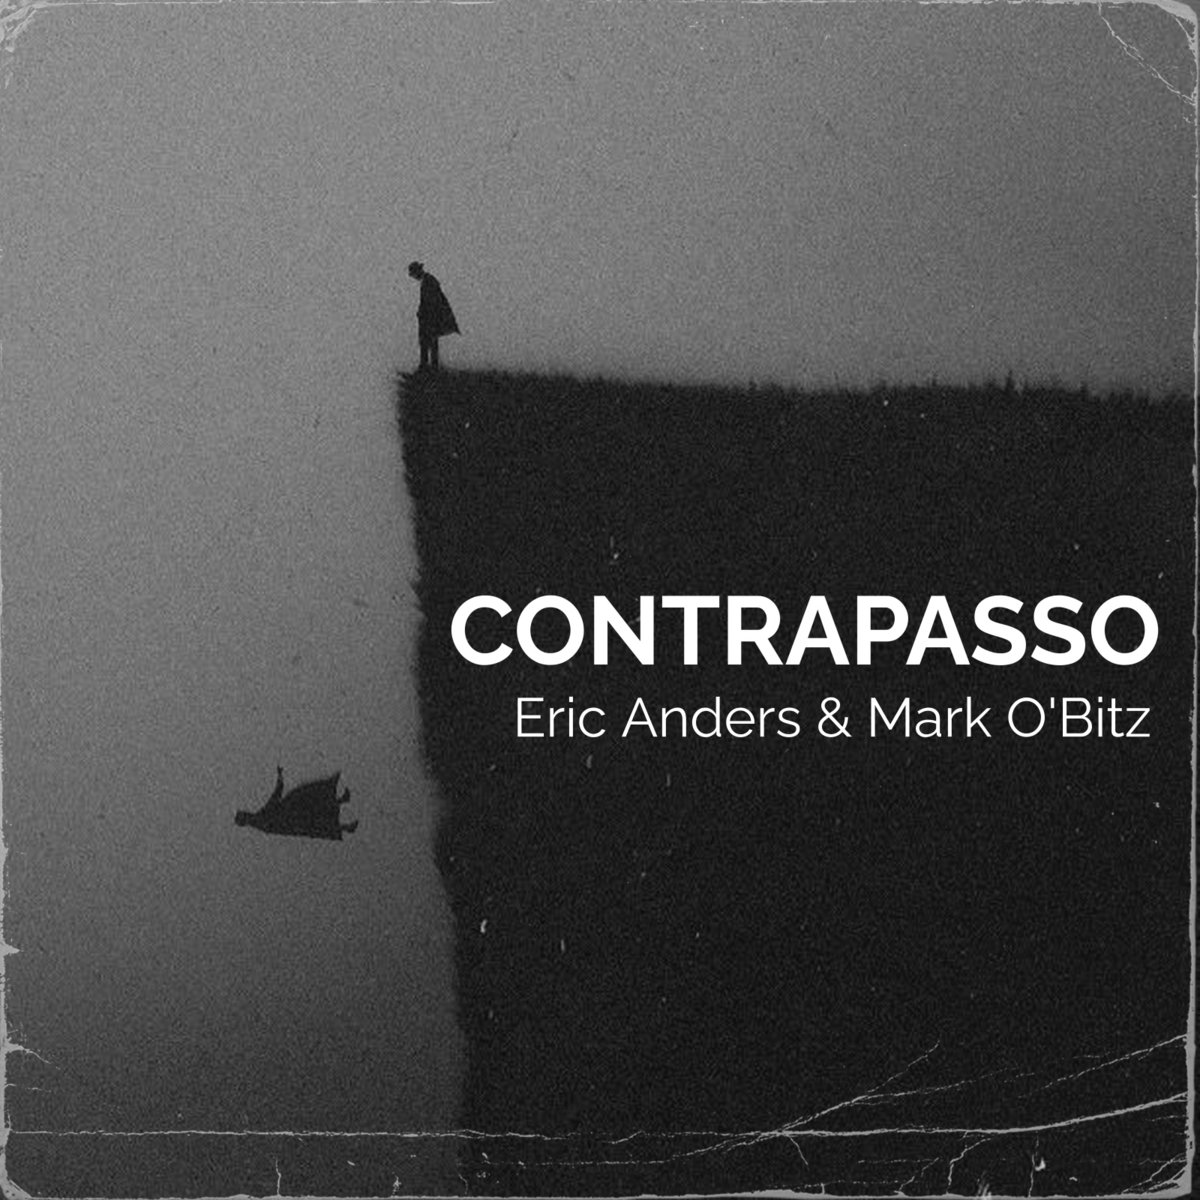 Eric Anders and Mark O'Bitz ‘Contrapasso’ album artwork